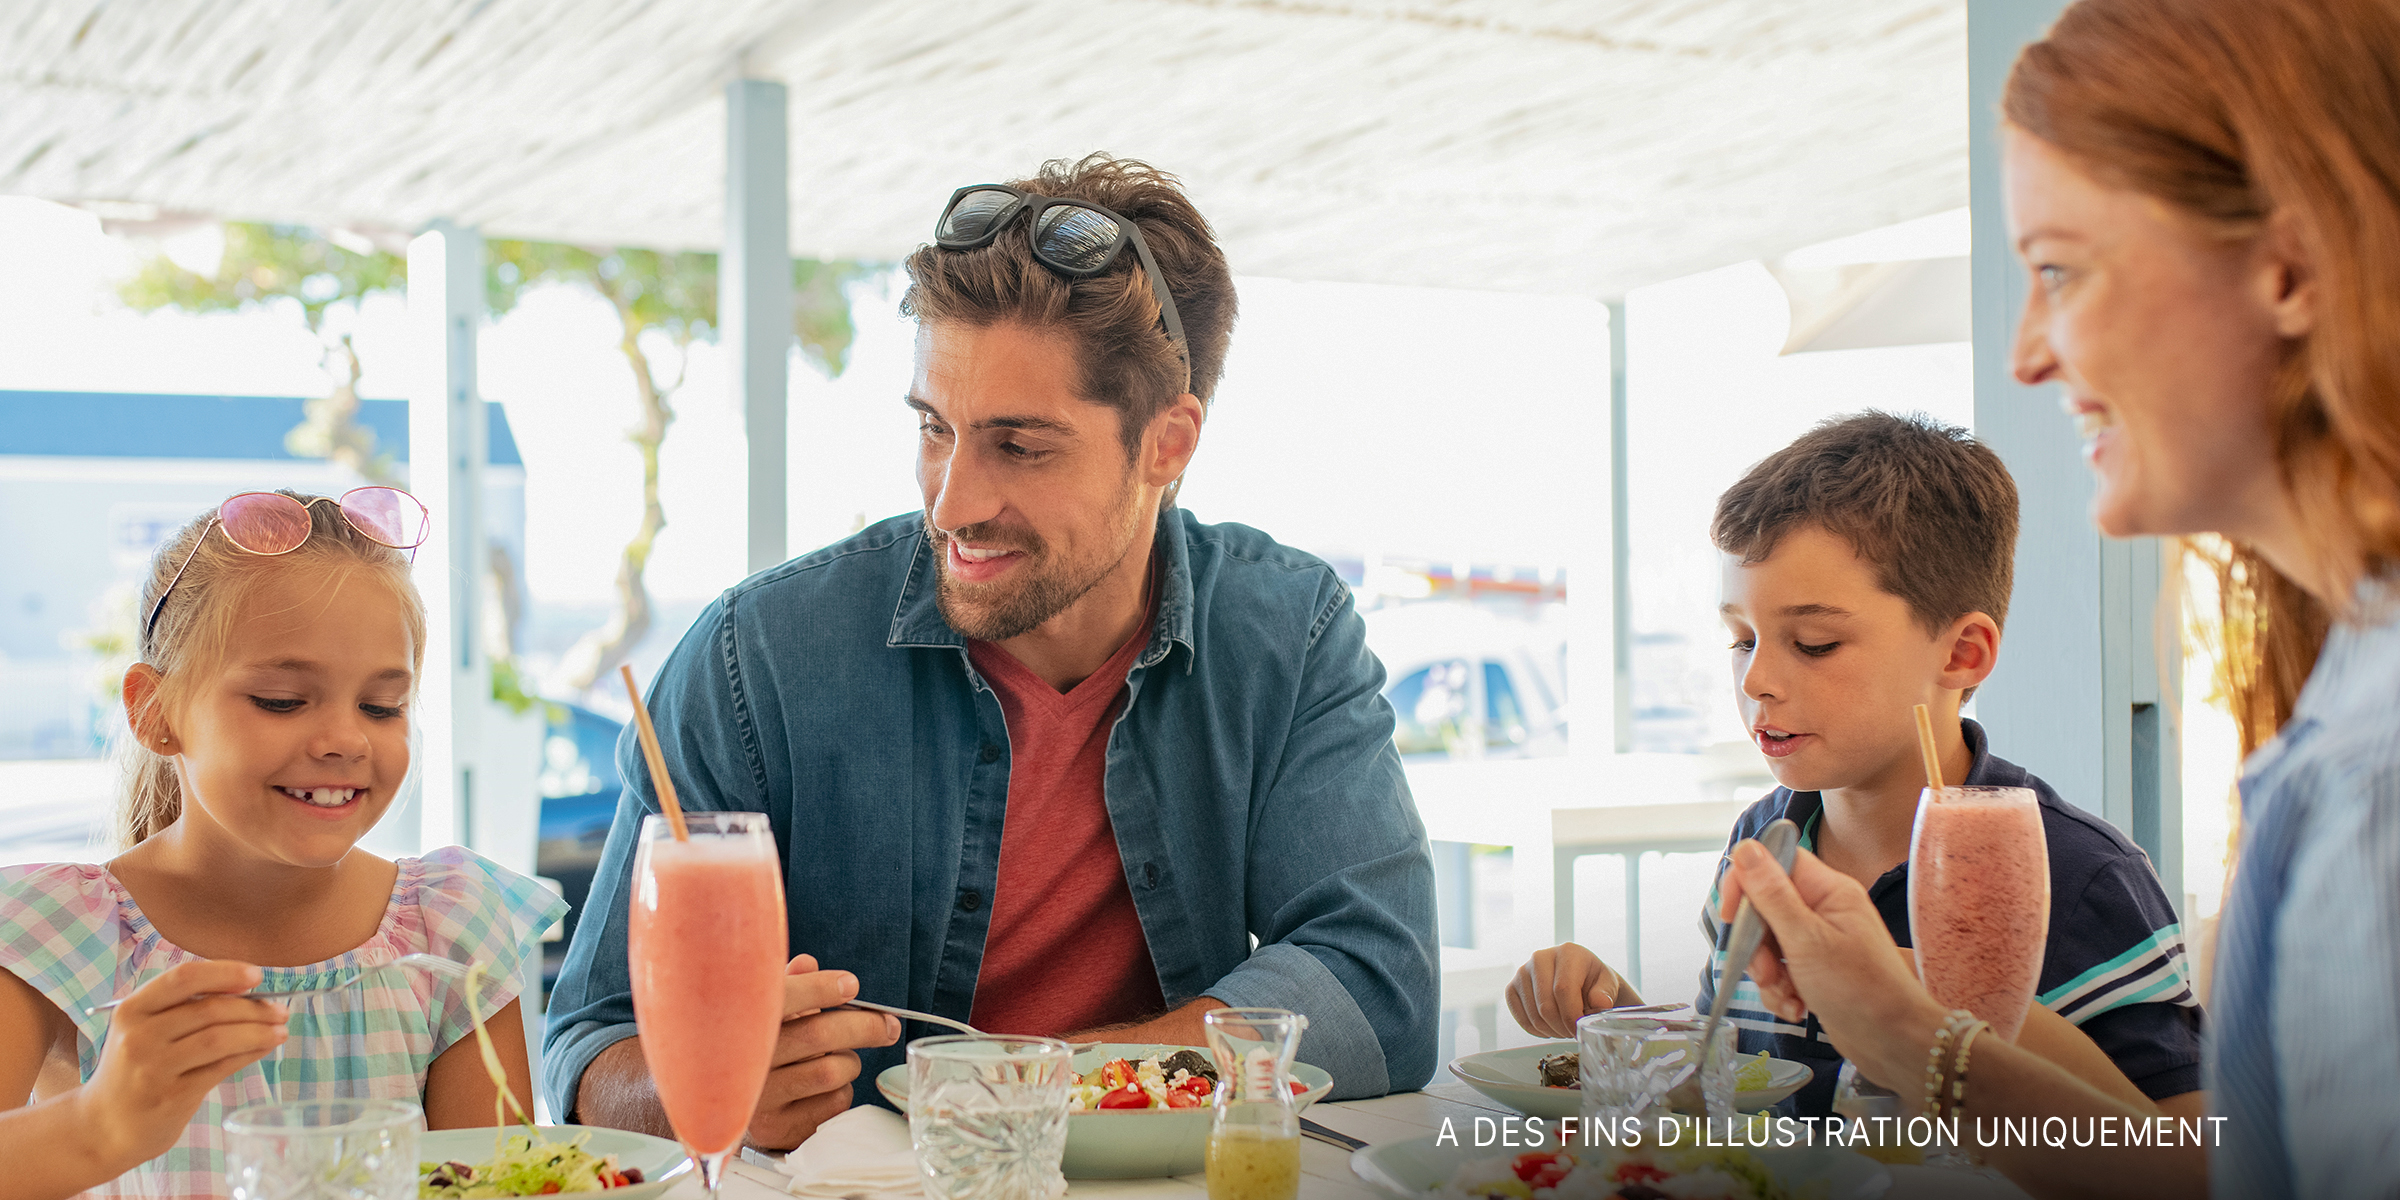 Une famille en train de manger au restaurant | Source : Shutterstock